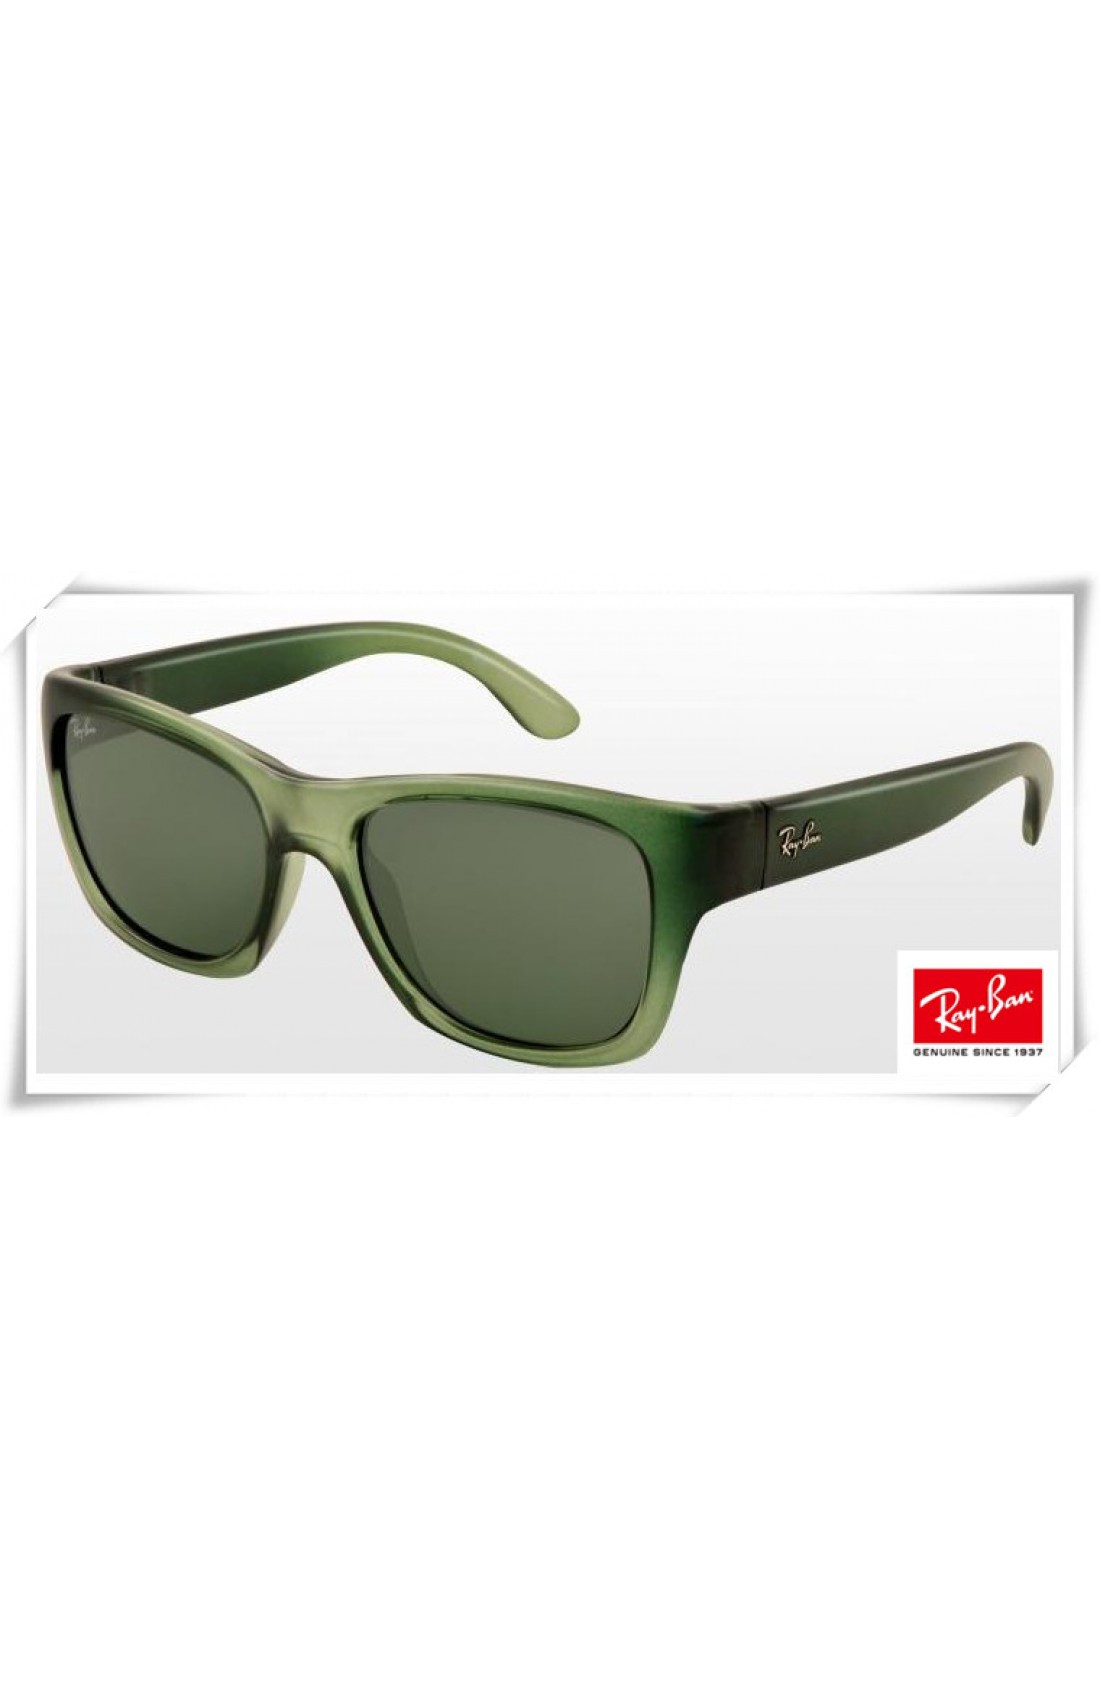 ray ban sunglasses green frame